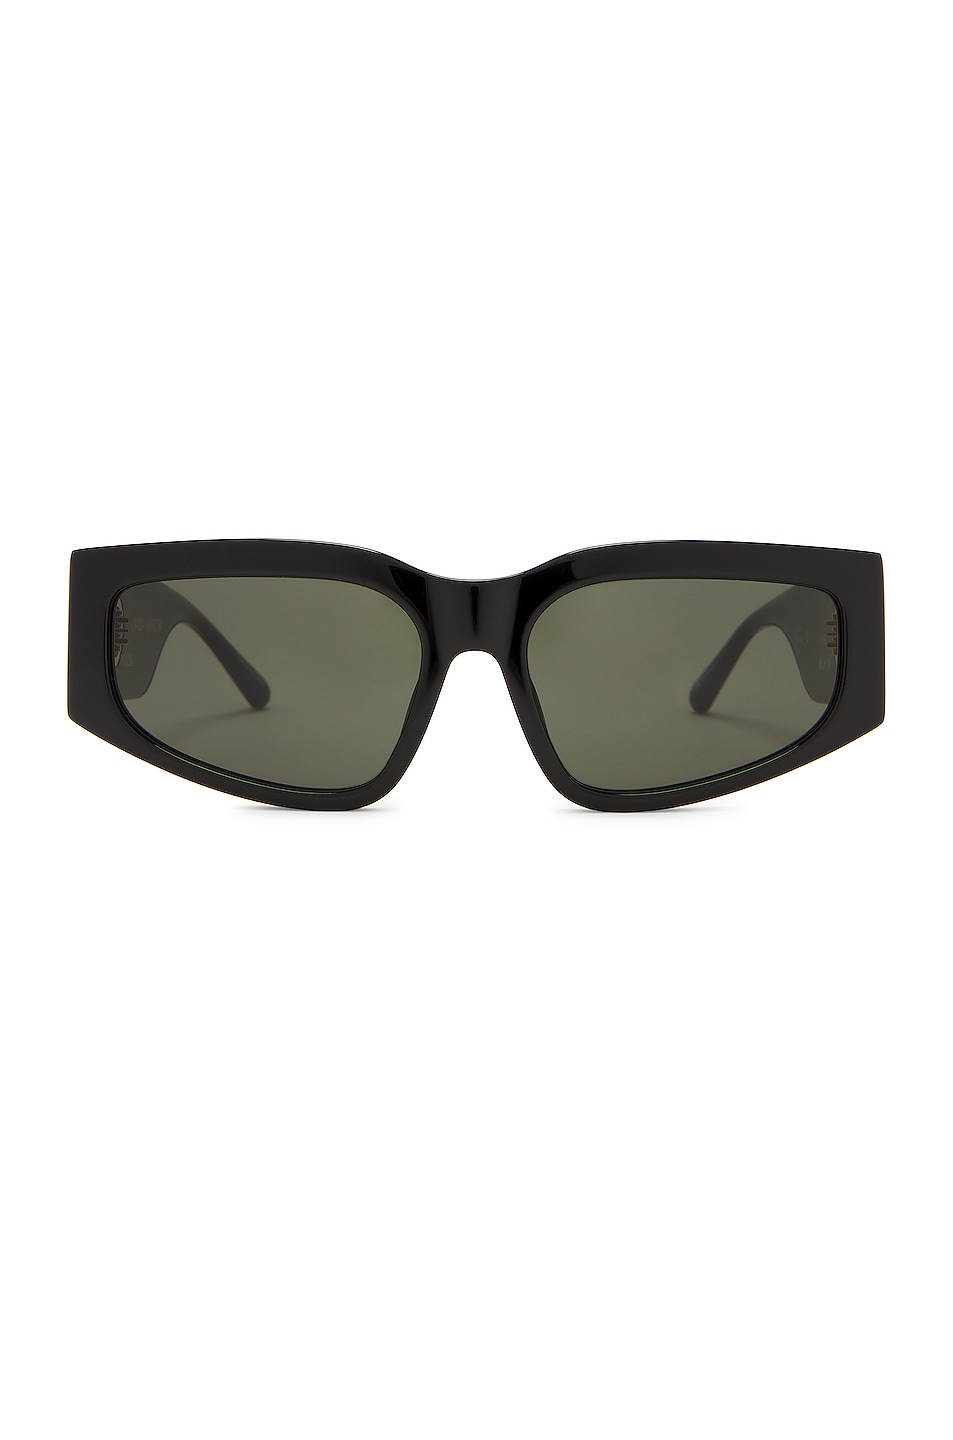 Senna Sunglasses in Black